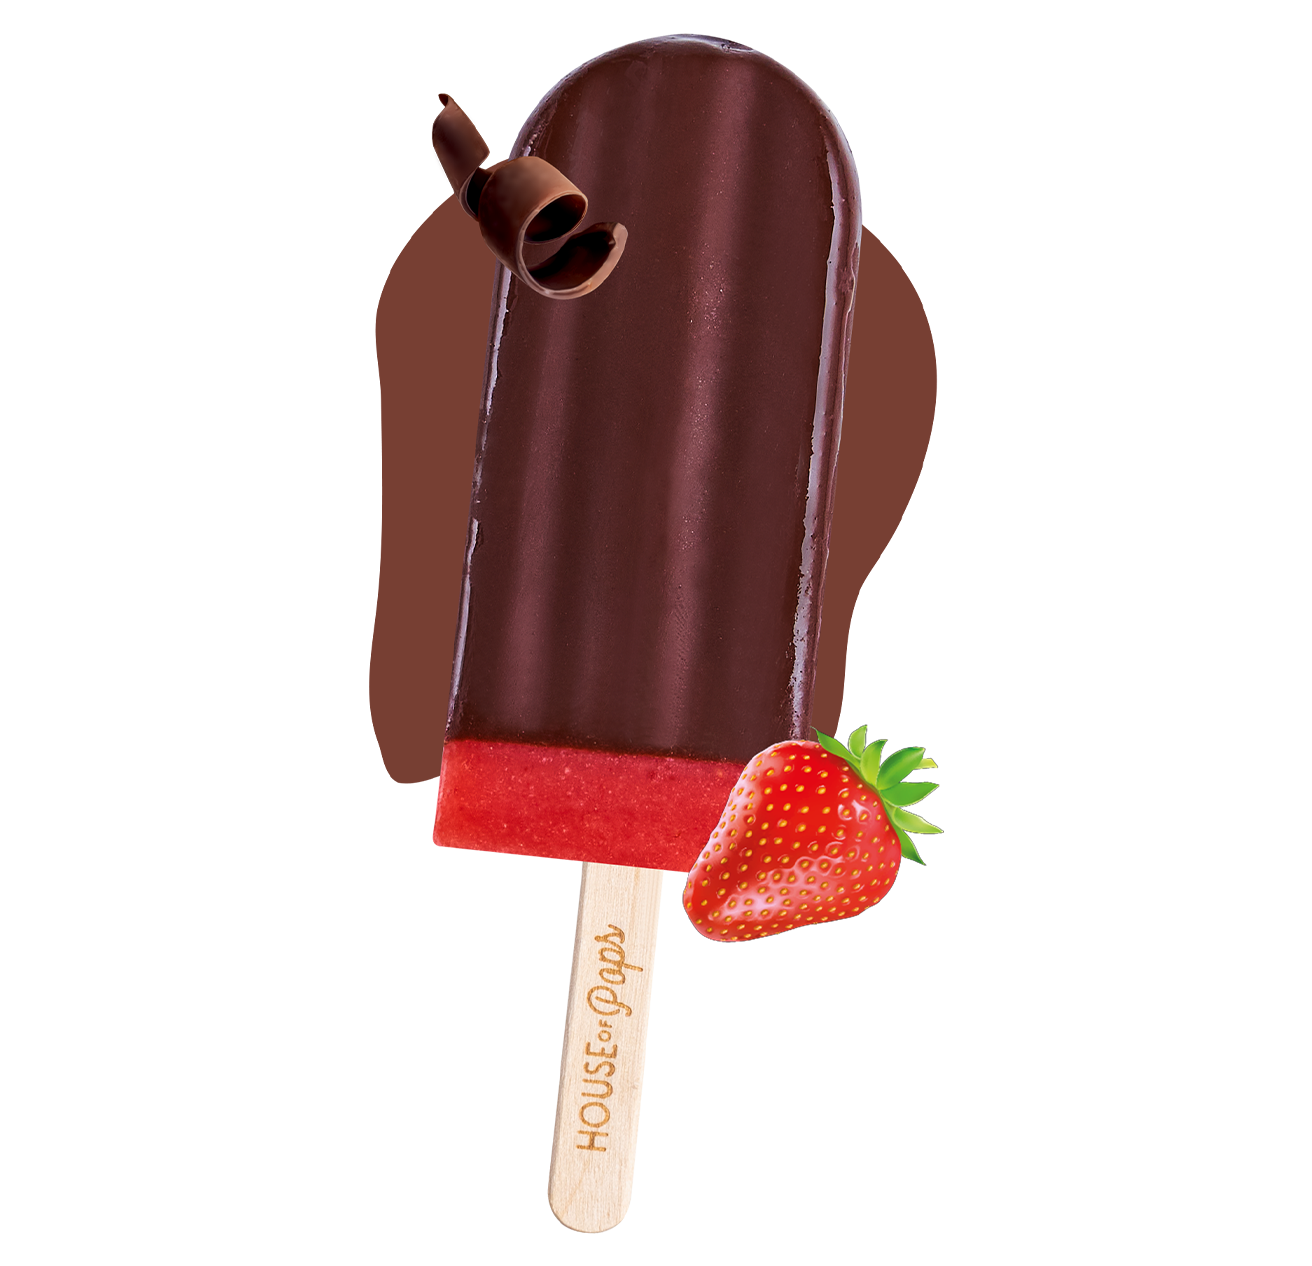 Choco Strawberry